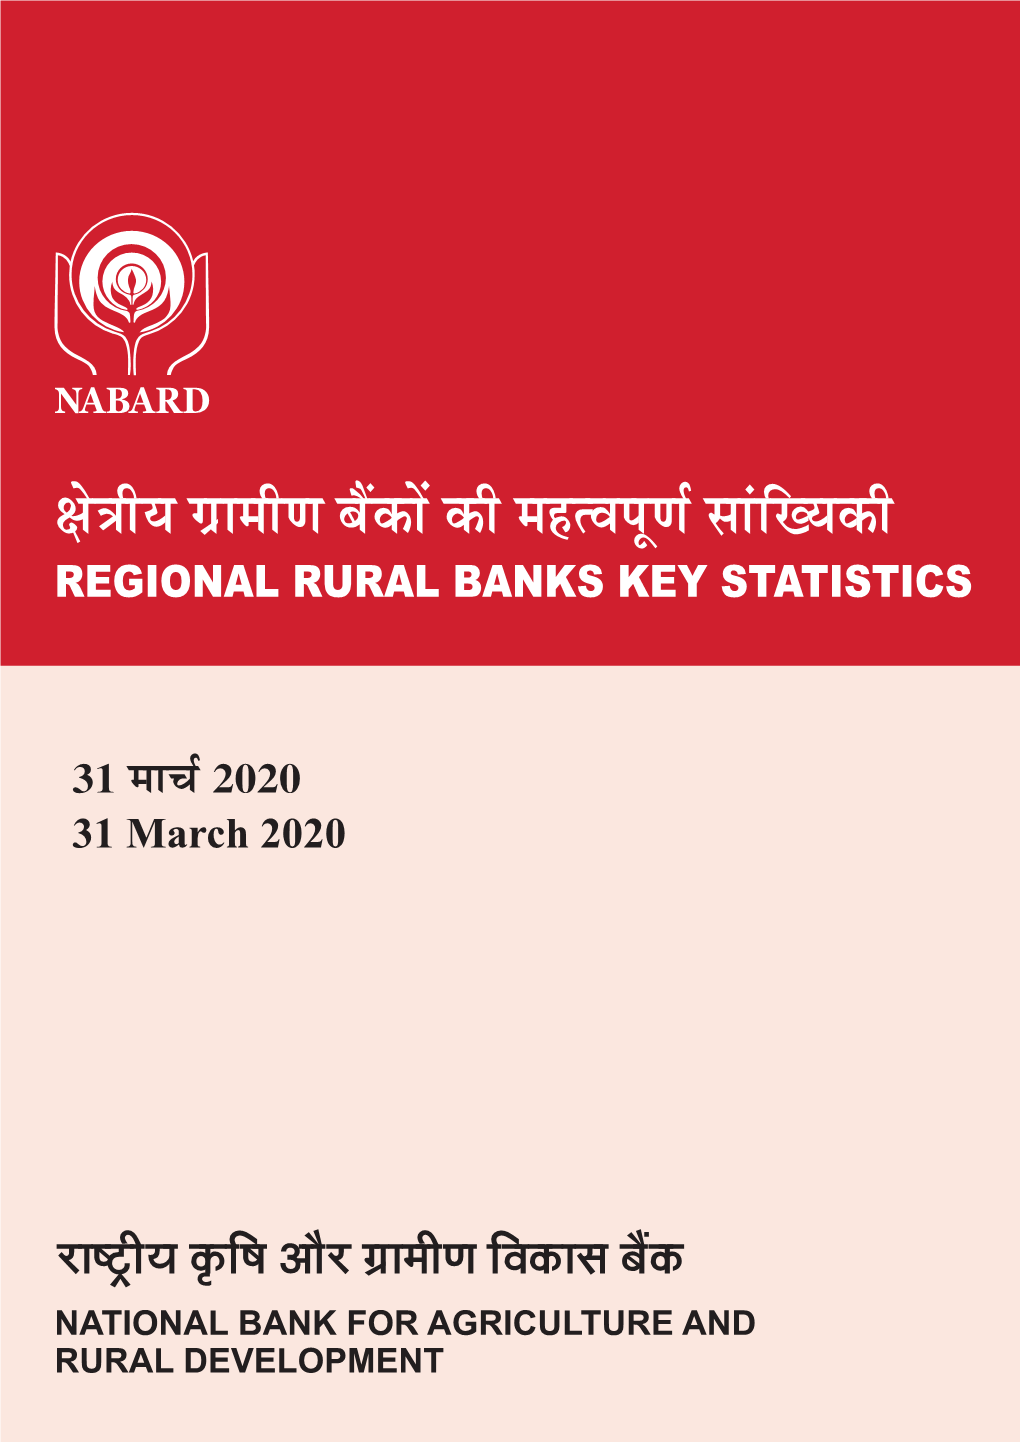 31 ½ممقمأ 2020 Regional Rural Banks Key Statistics